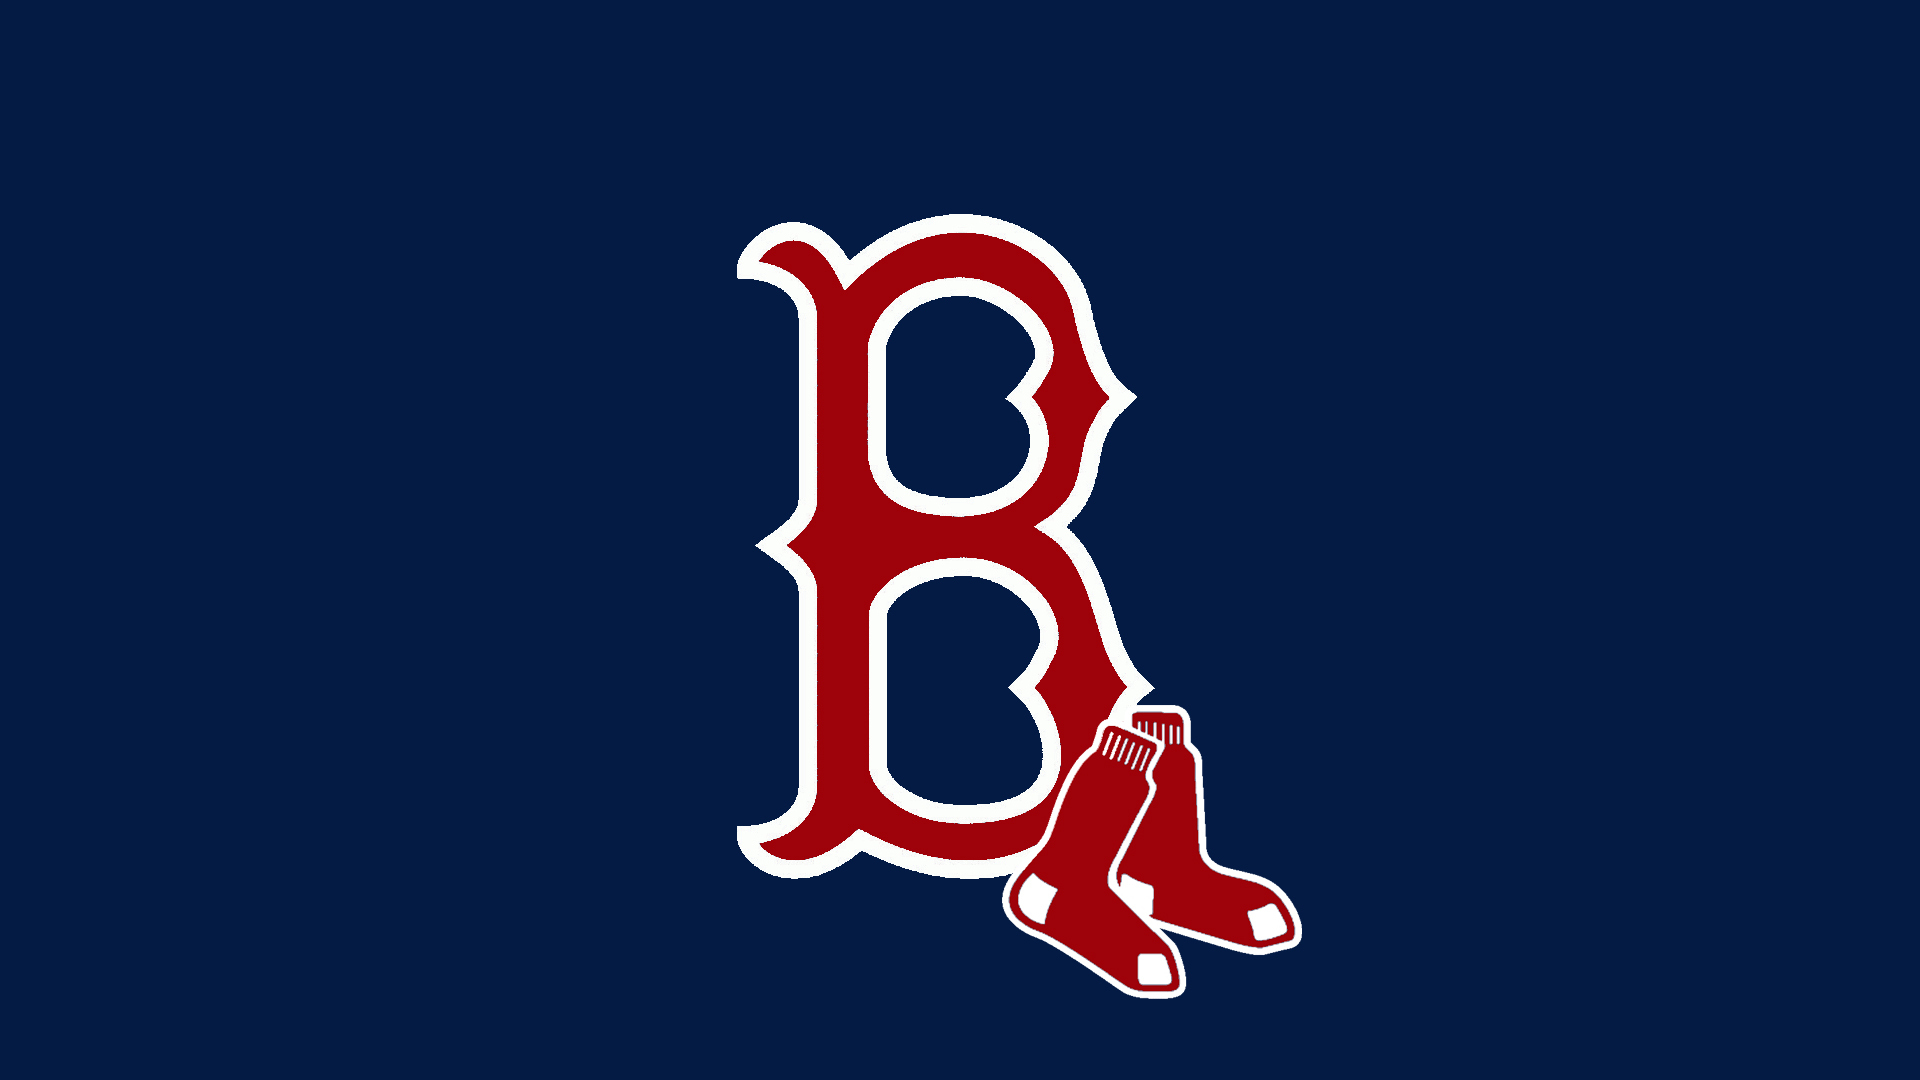 Red Sox Logo Desktop Wallpaper Image Amp Pictures Becuo